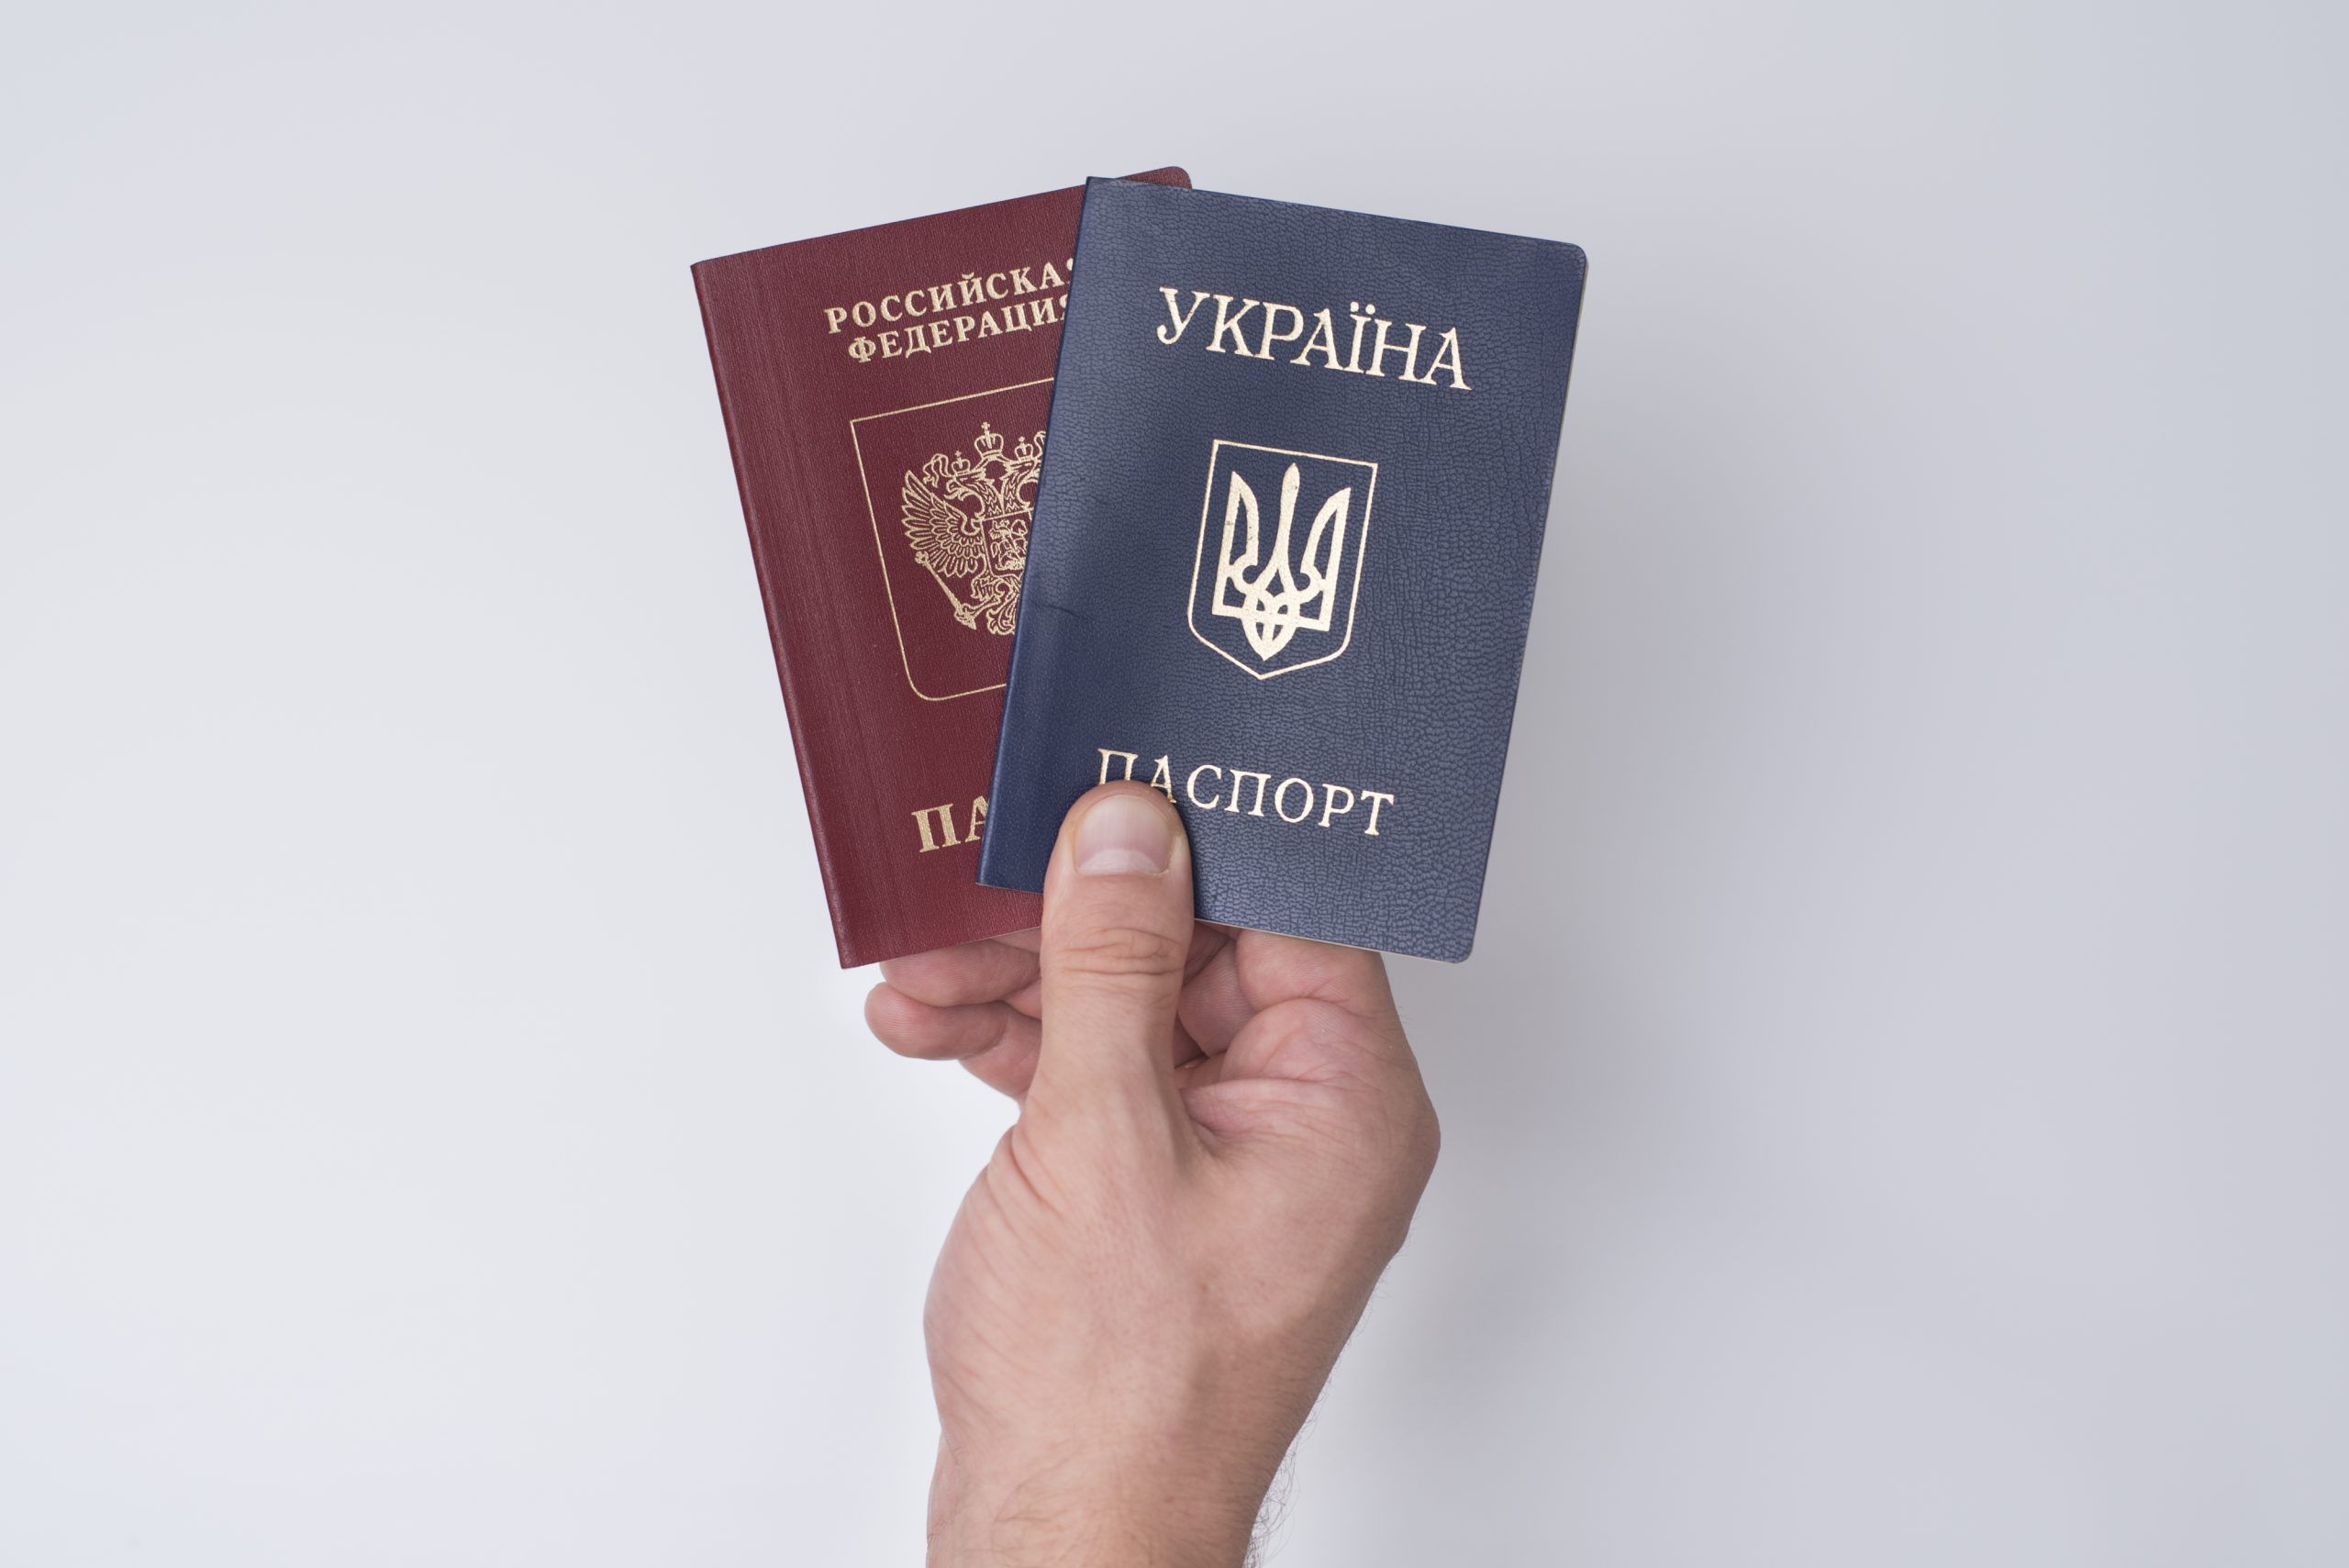 Ukrainian and Russian passports